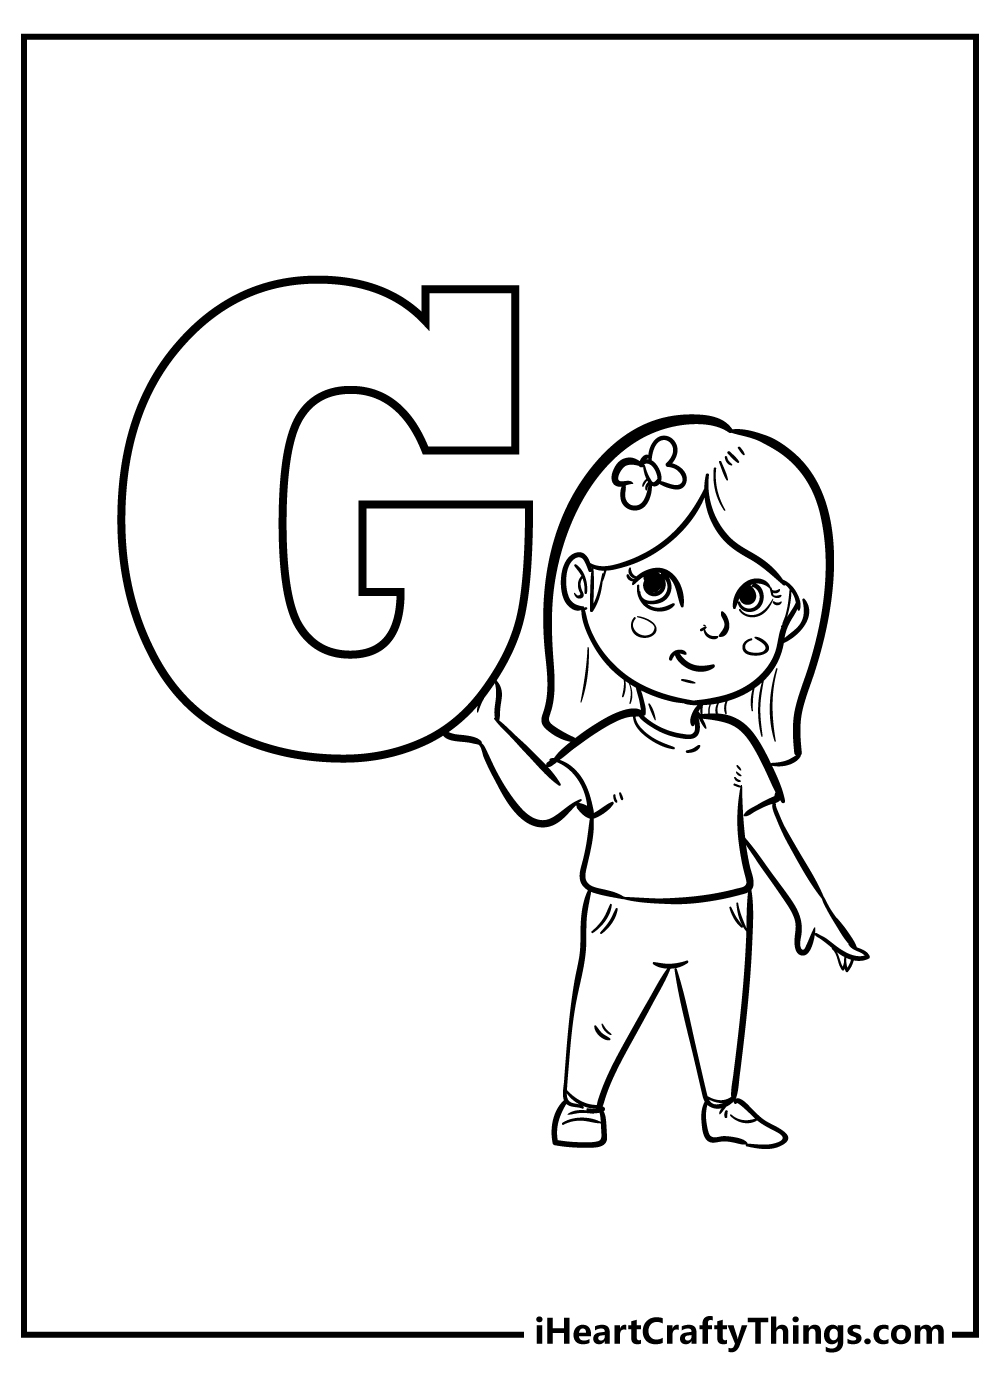 Letter G Coloring Sheet for children free download